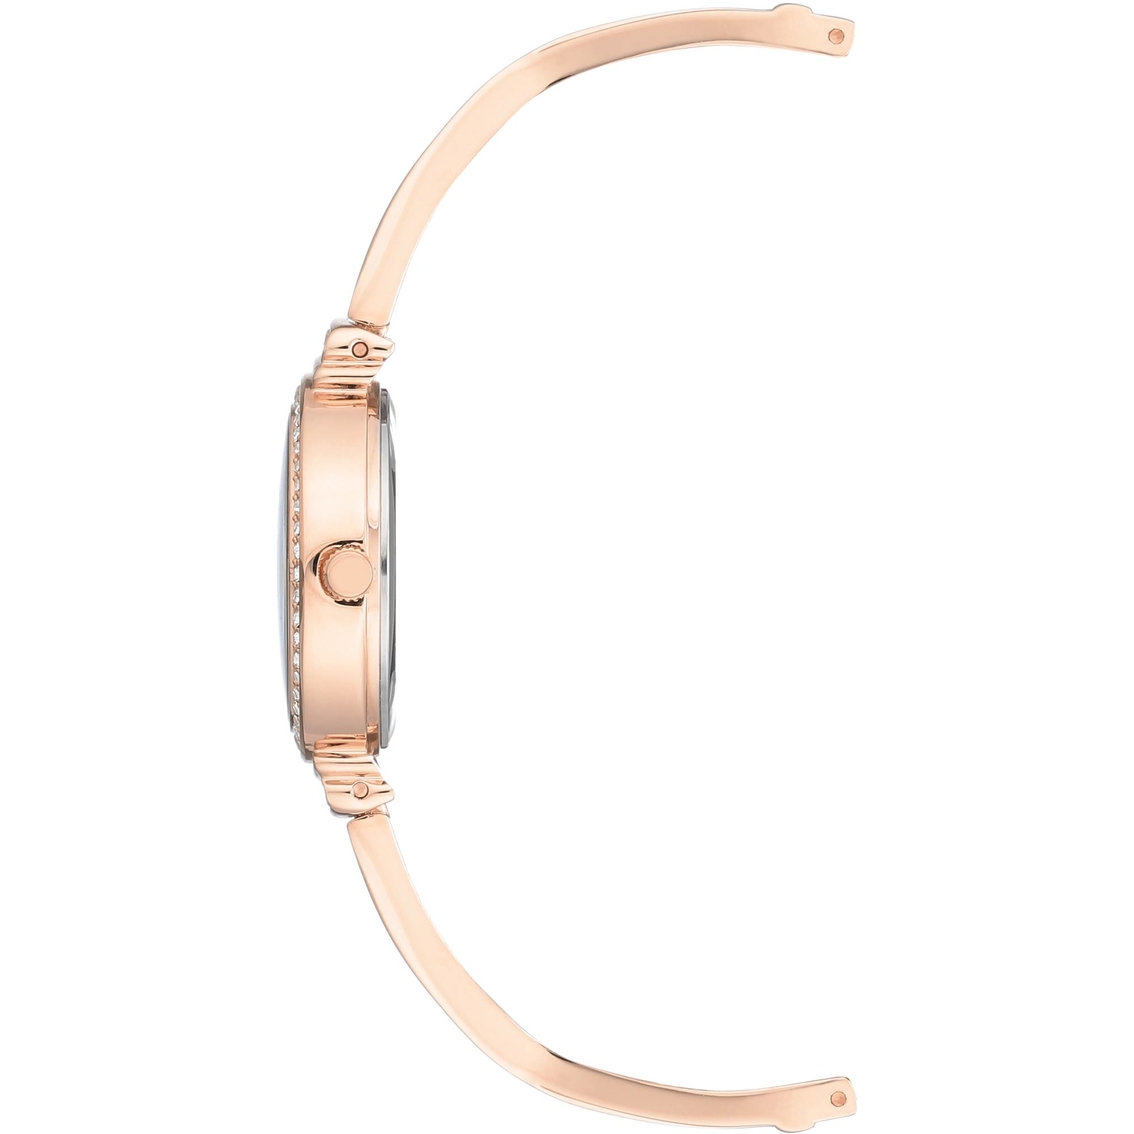 Anne Klein Women's Swarovski Crystal Accented Rose Goldtone Watch and Bracelet Set - Image 3 of 3